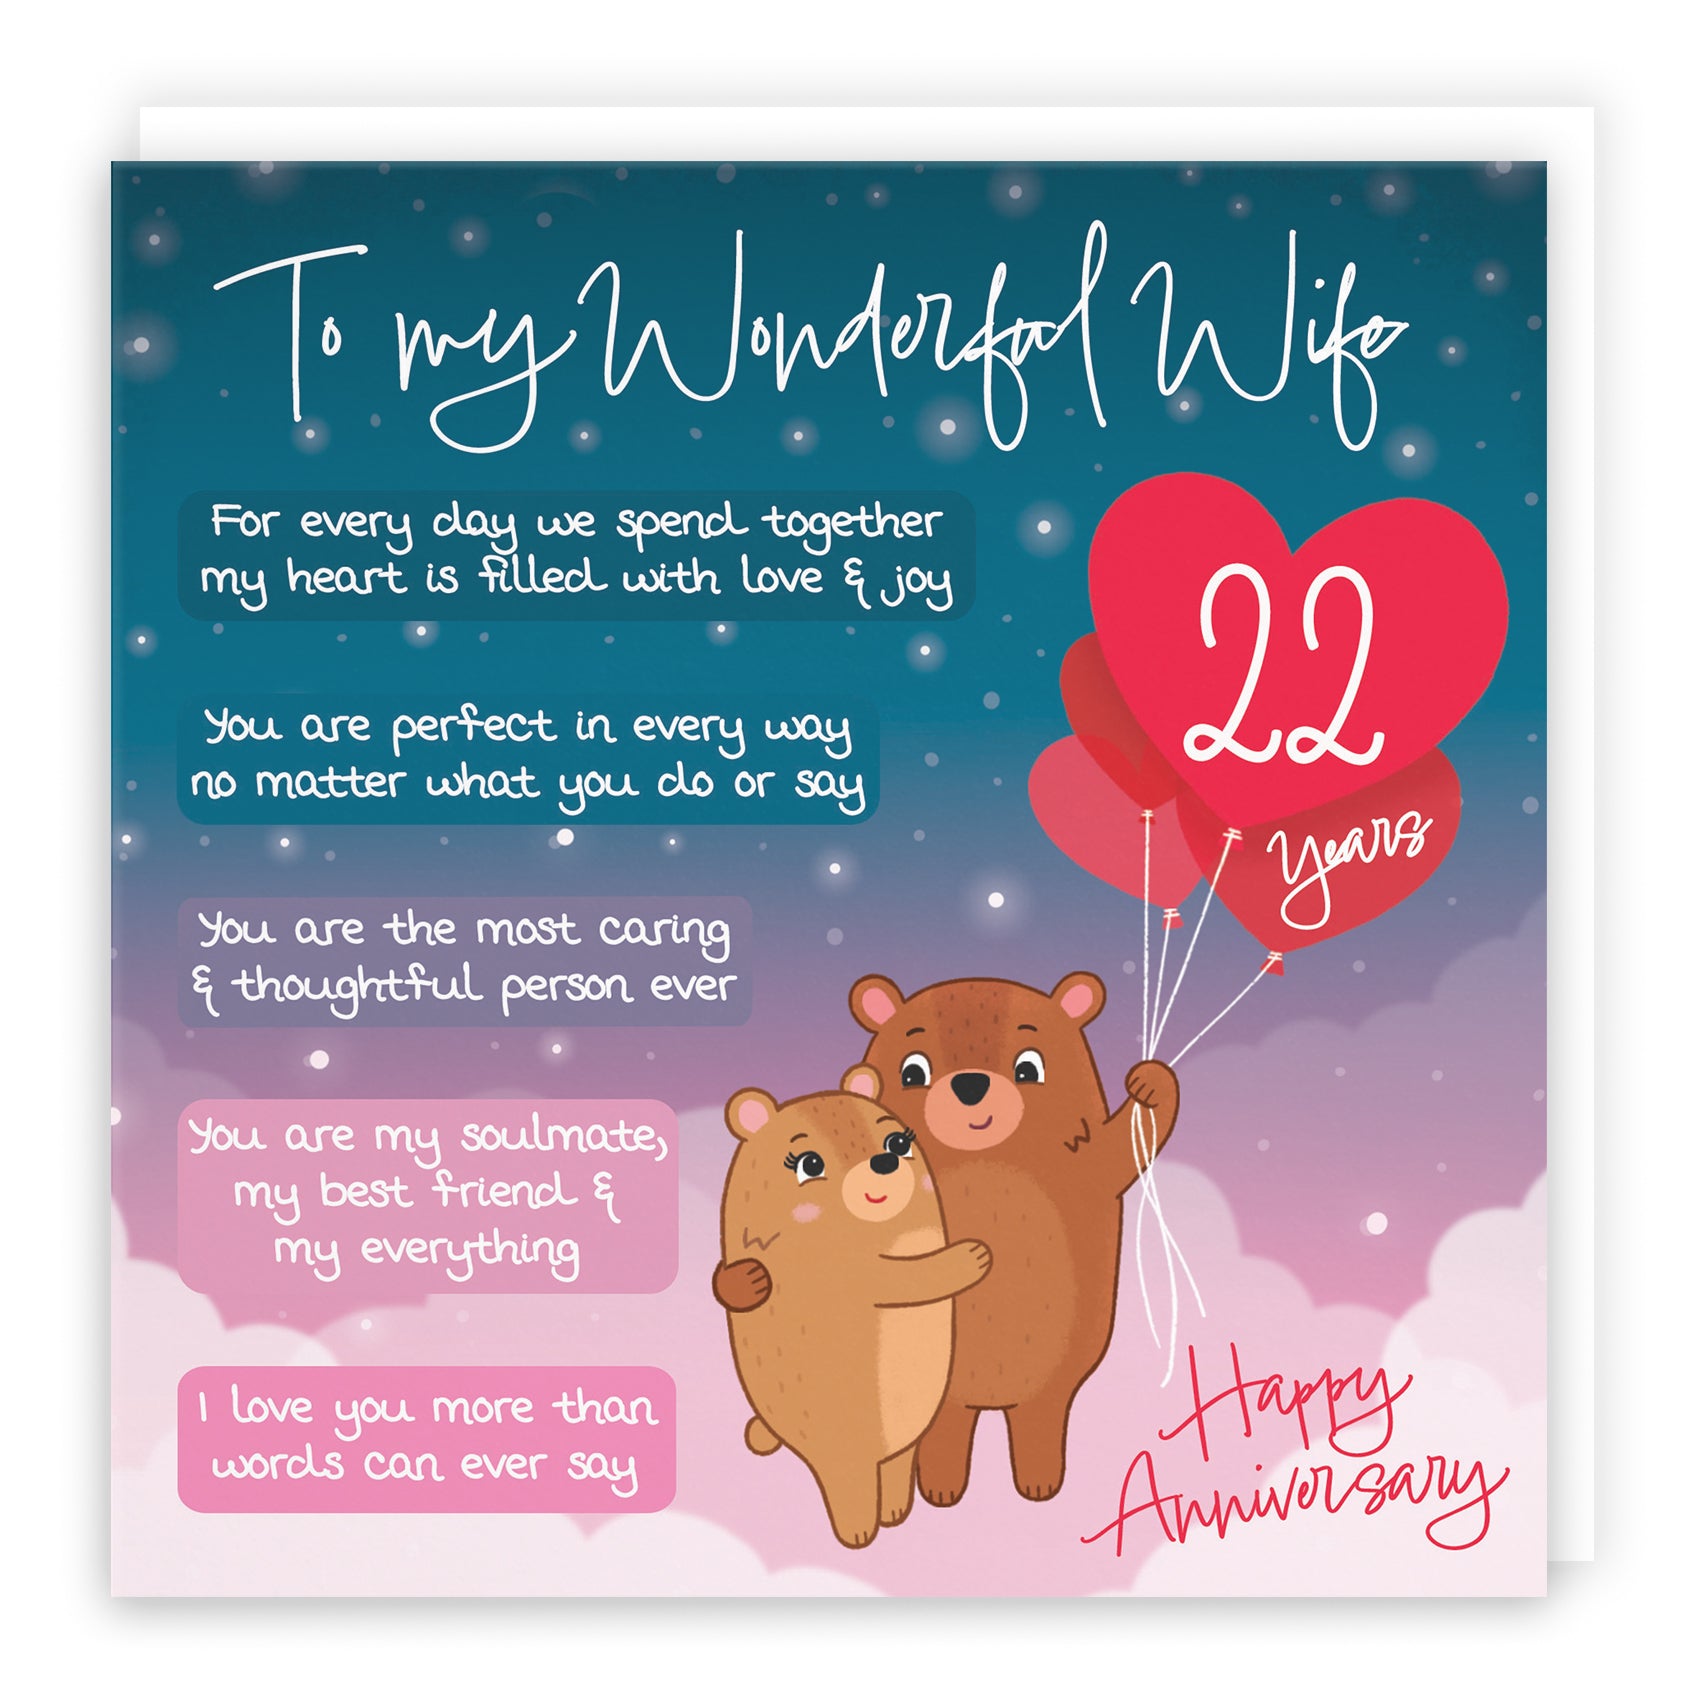 Wife 22nd Anniversary Card Starry Night Cute Bears